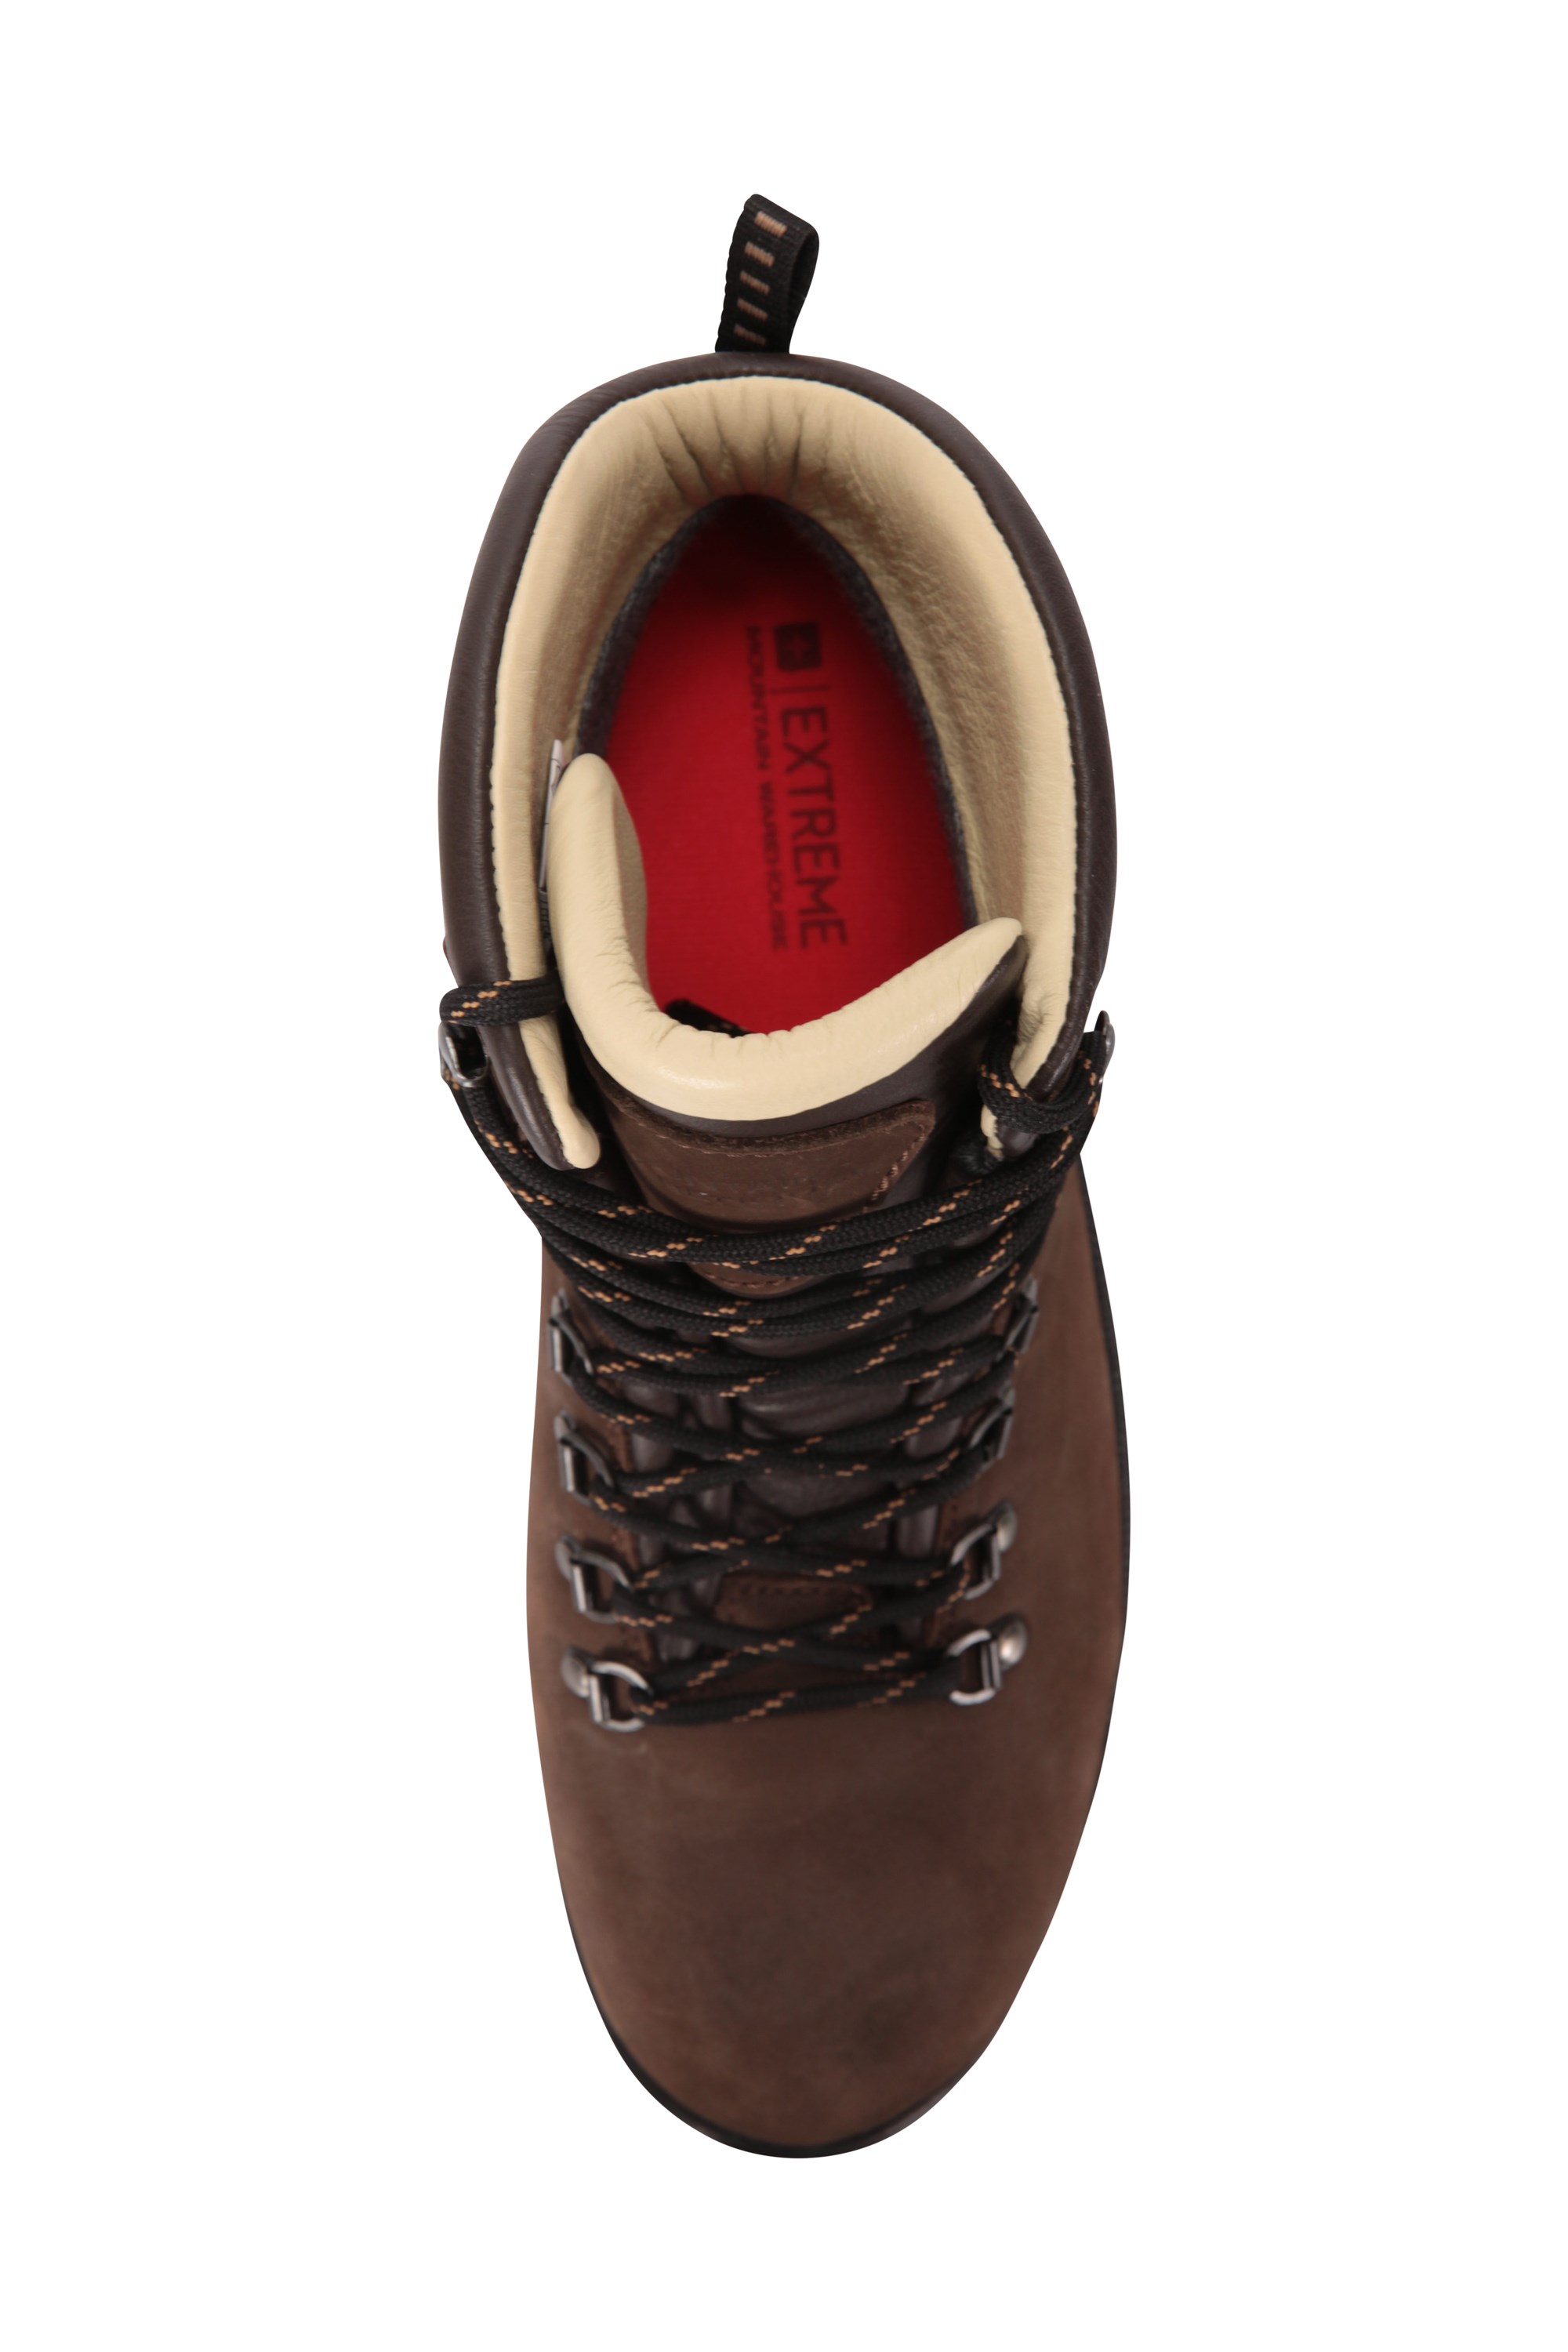 excalibur mens leather waterproof boots